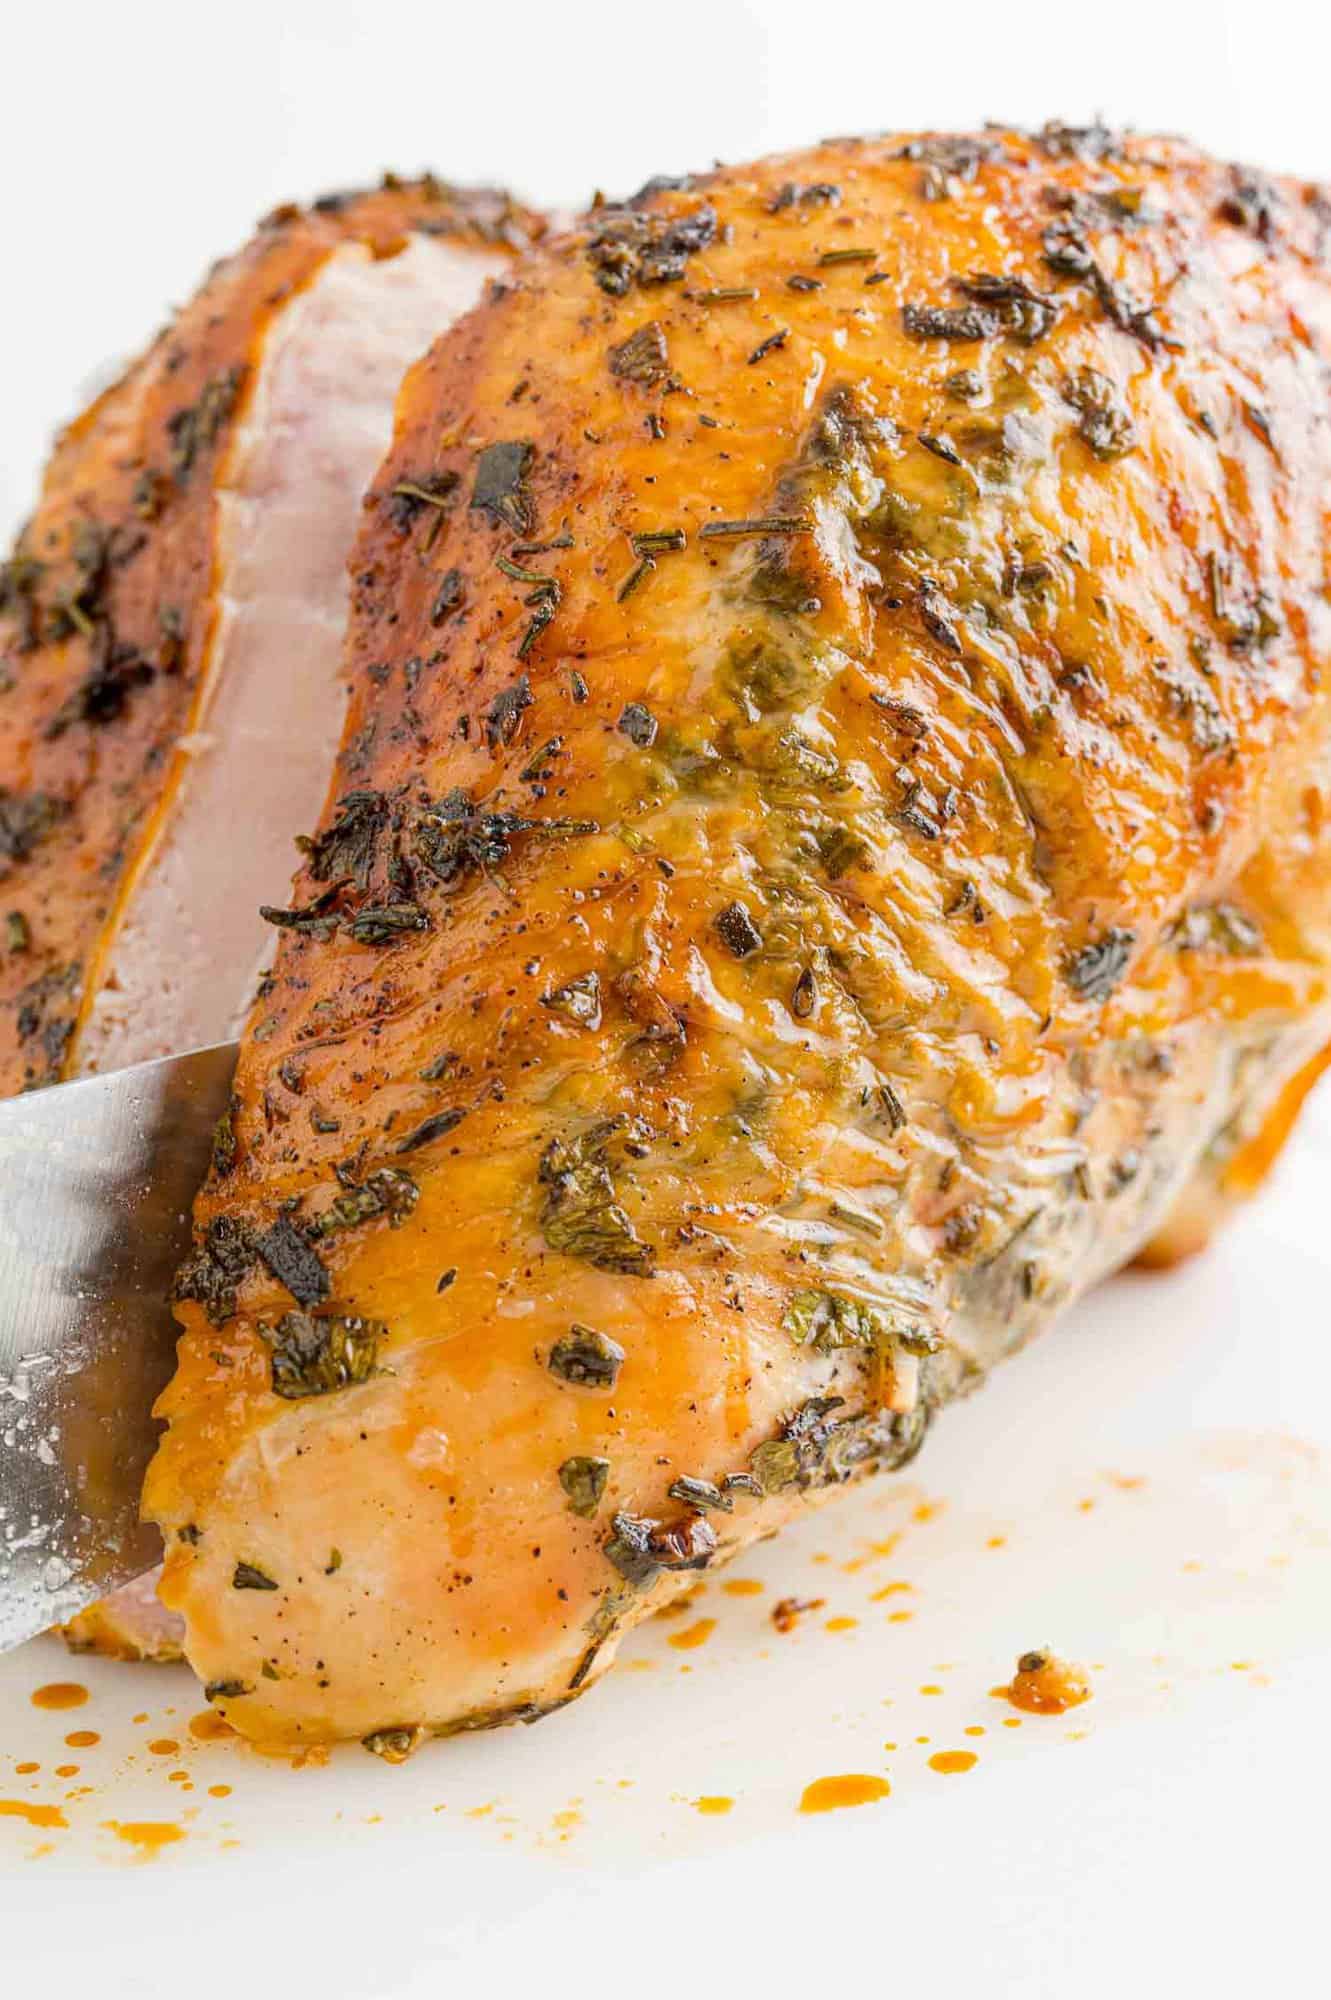 Turkey breast being sliced.